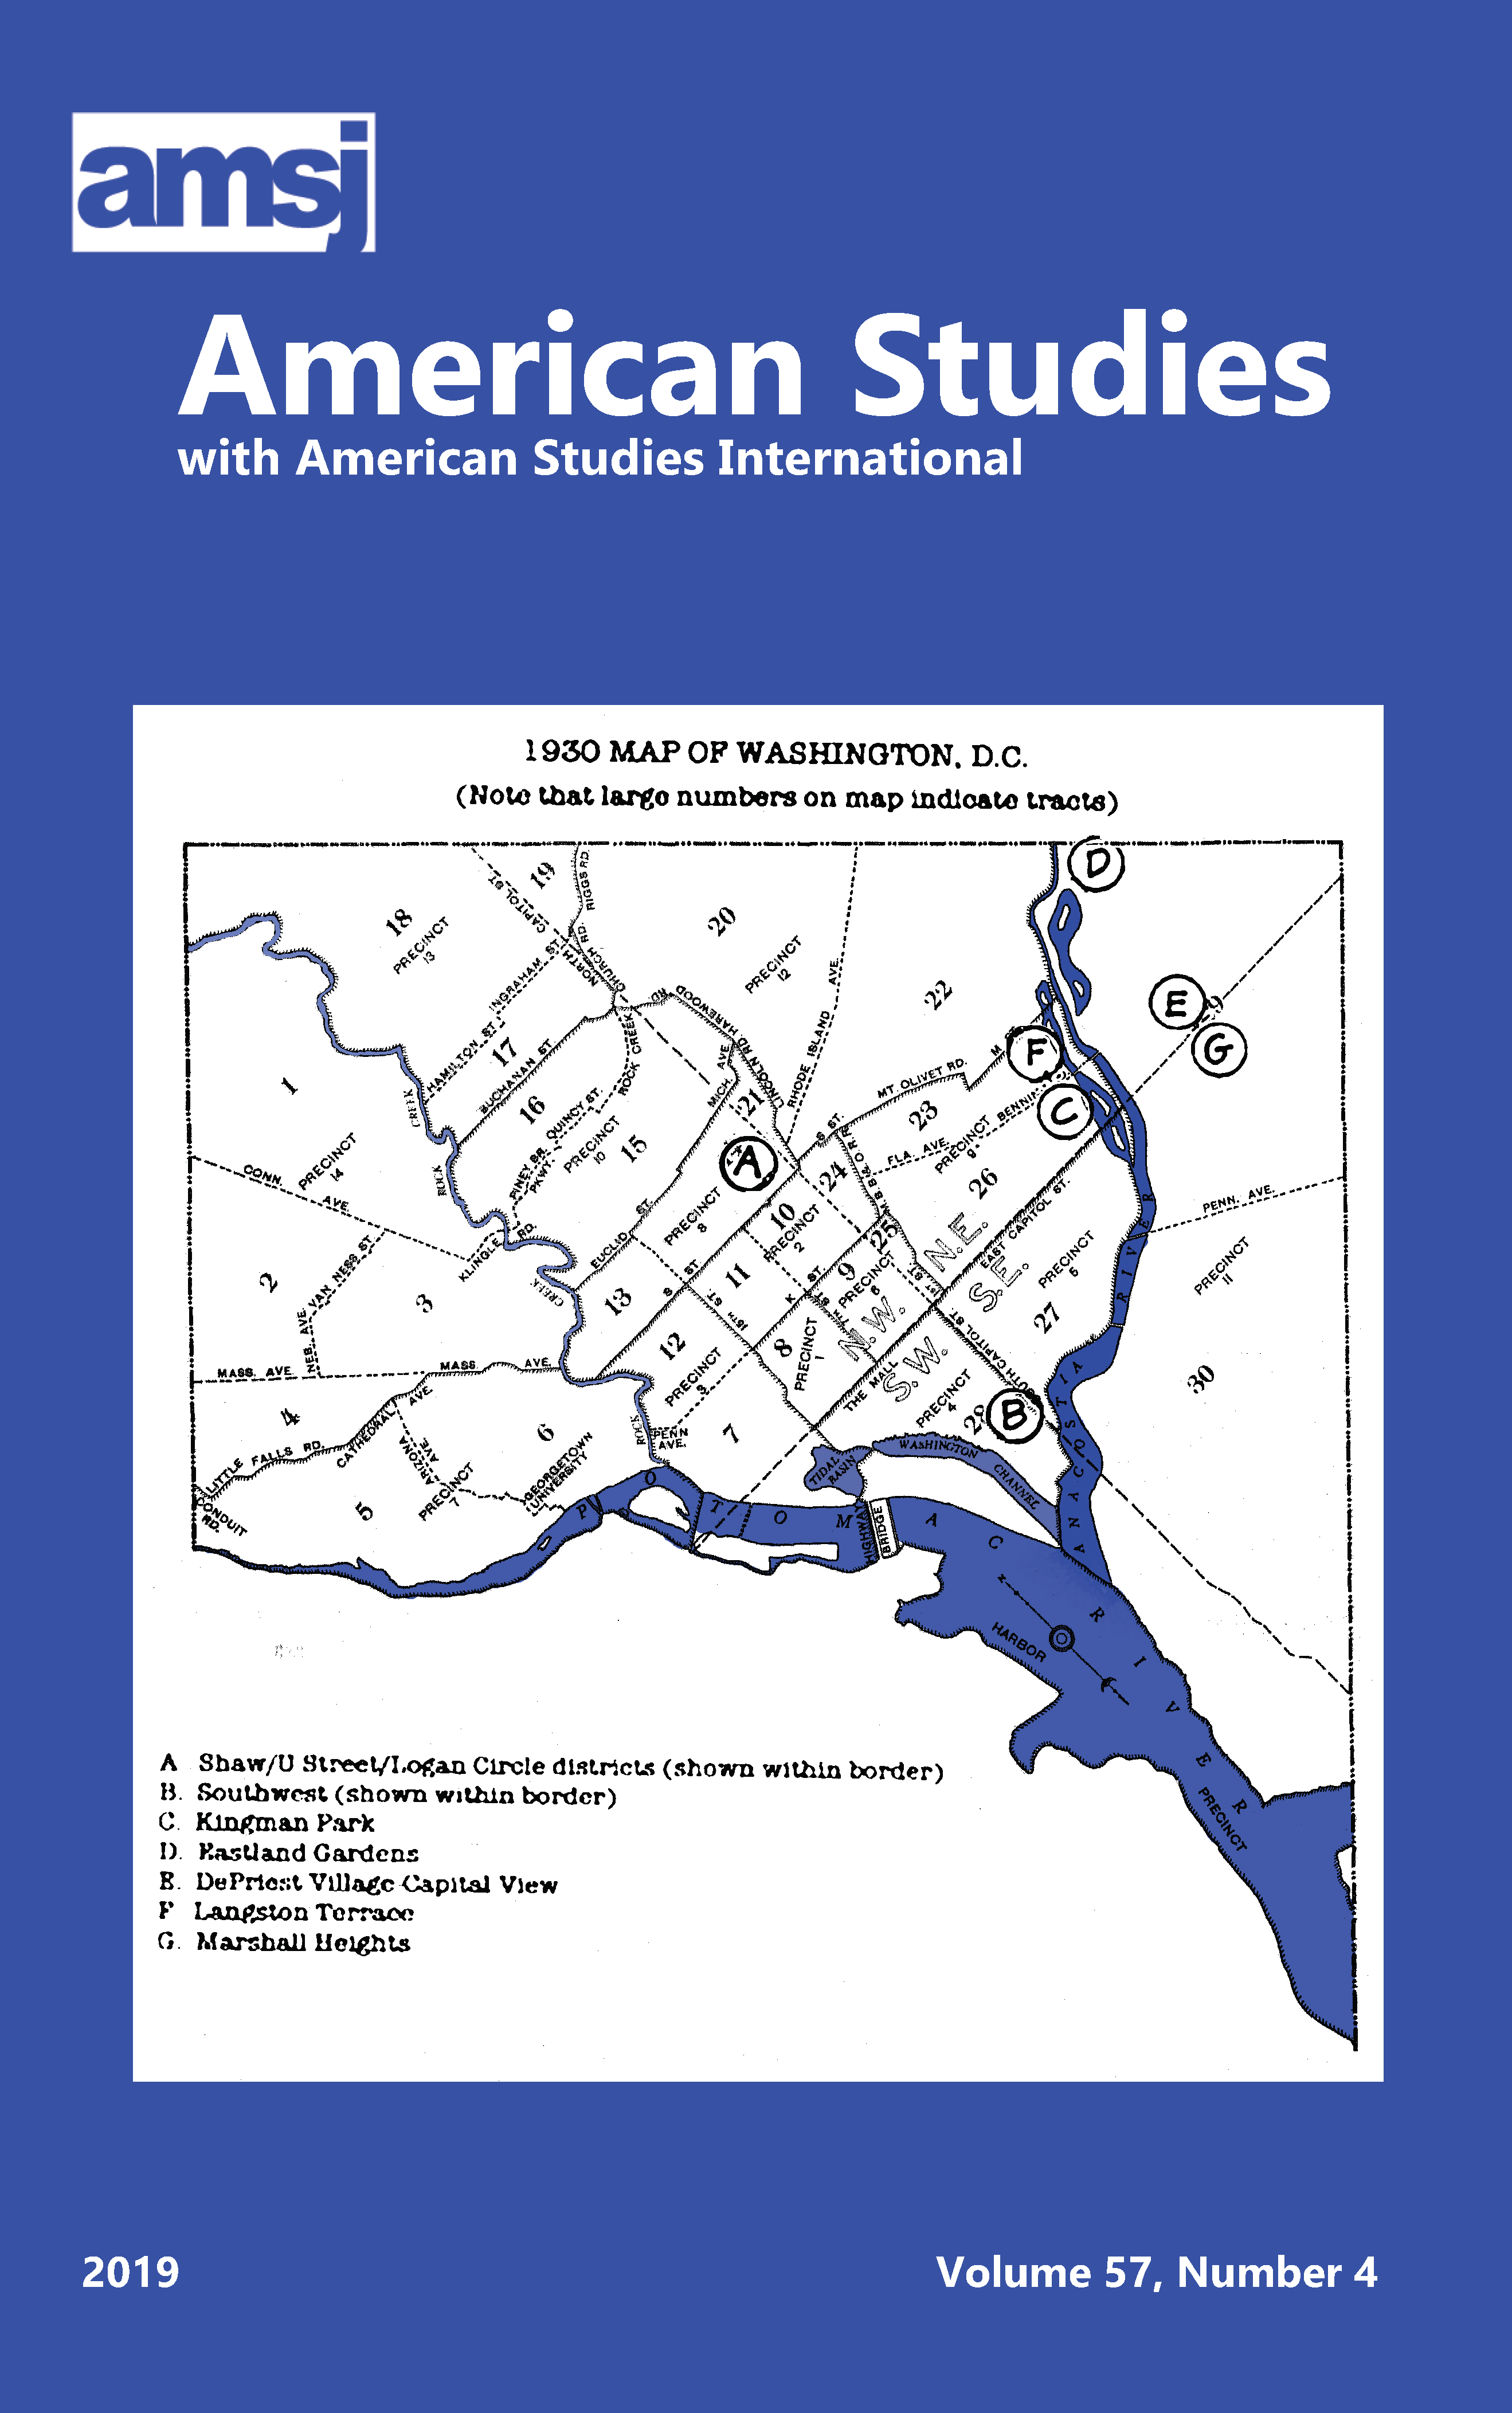 AMSJ American Studies journal